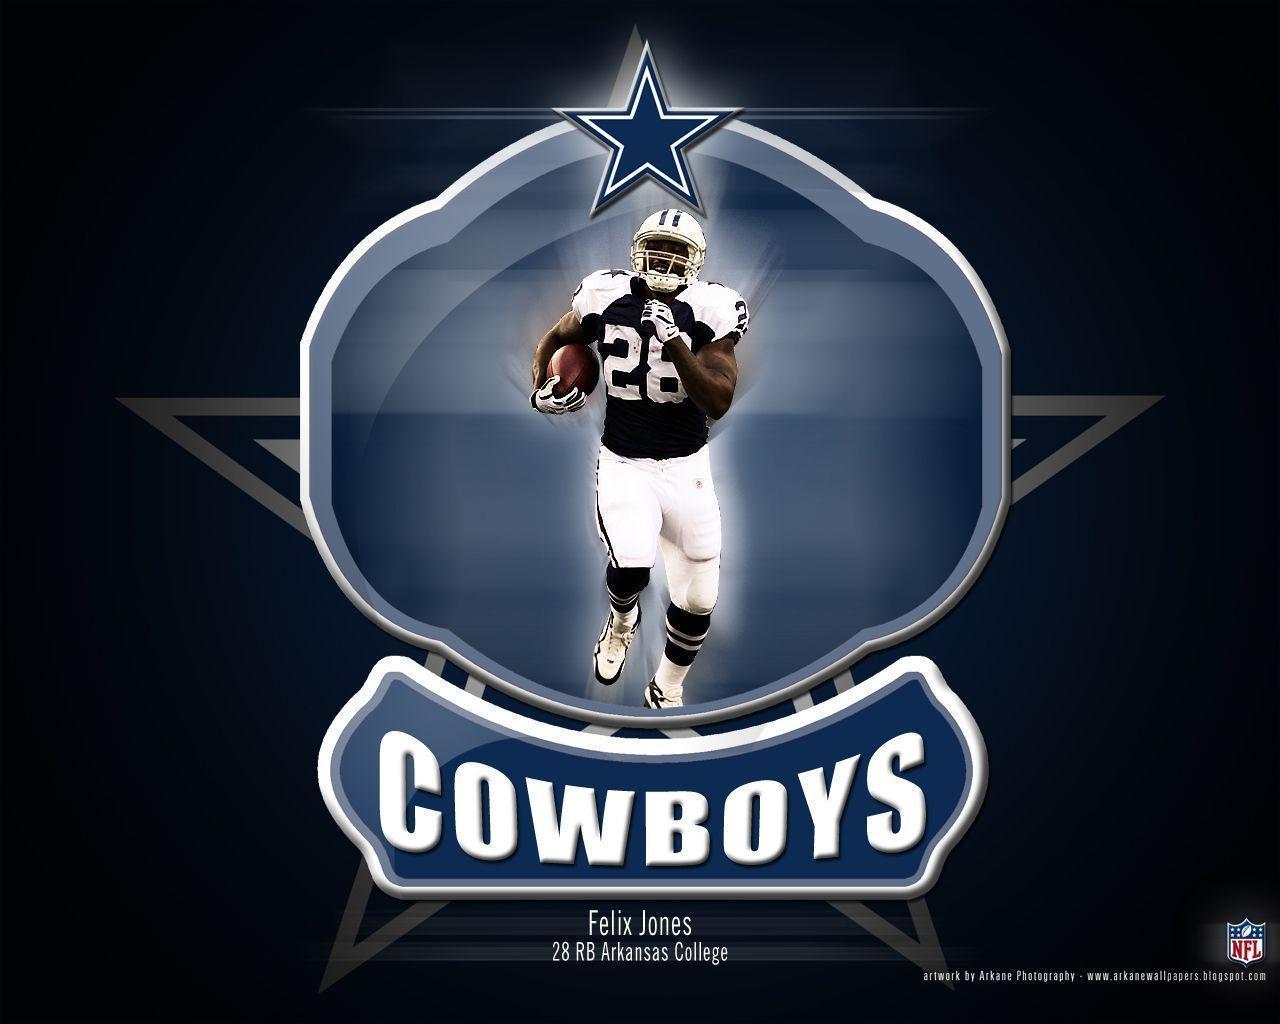 Enjoy this new Dallas Cowboys wallpaper desktop background